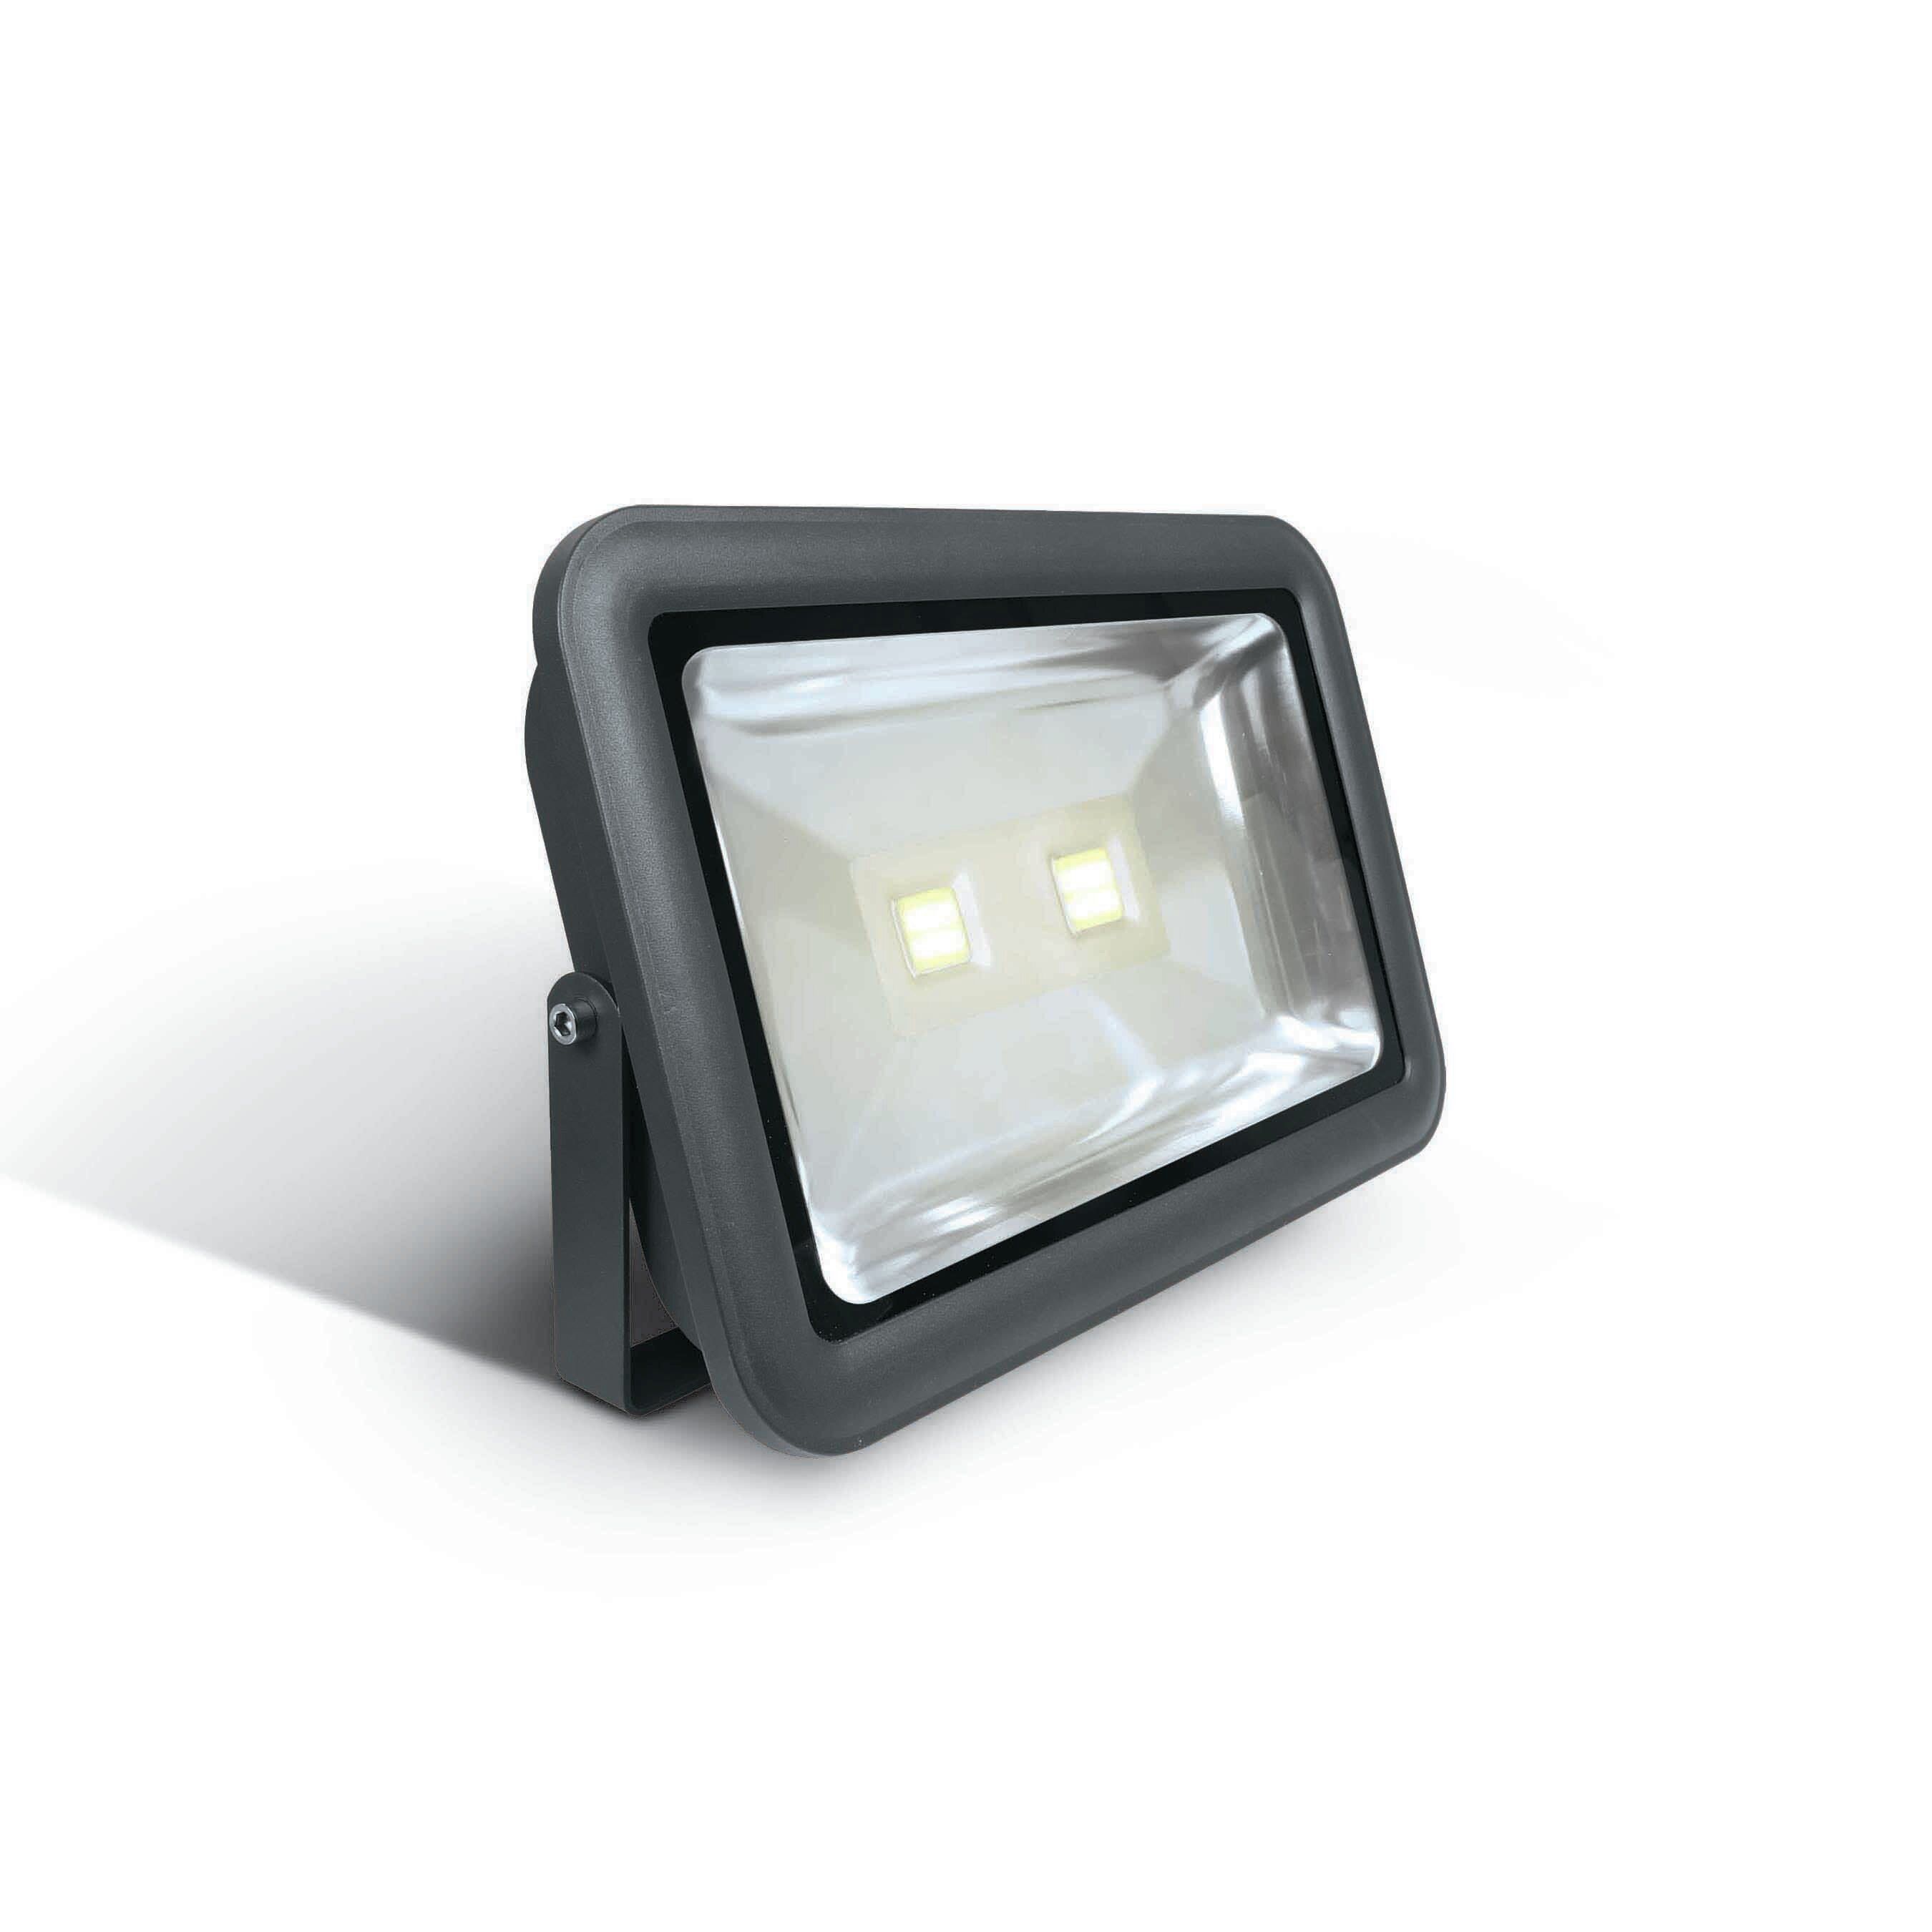 weten Reusachtig Pekkadillo ONE Light COB LED Slim Floodlights - verstraler - 35 x 8,7 x 28,9 cm - 2 x  50W LED incl. - IP65 - antraciet | Lichtkoning